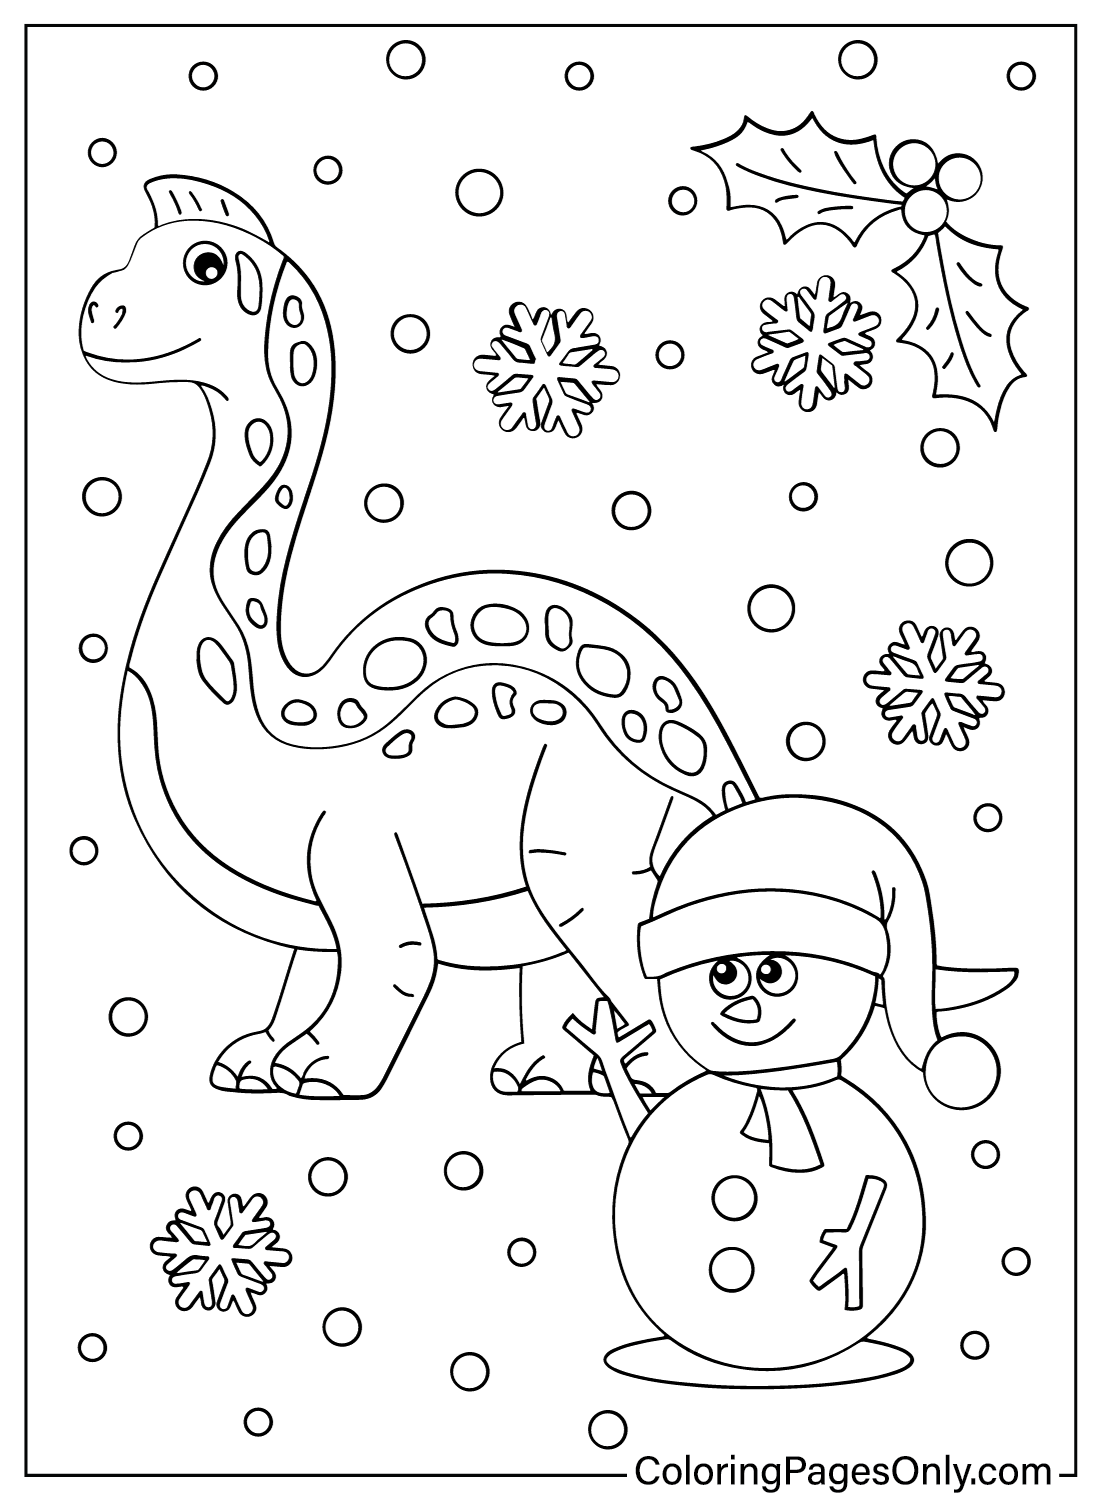 Free Christmas Dinosaur and Snowman Coloring